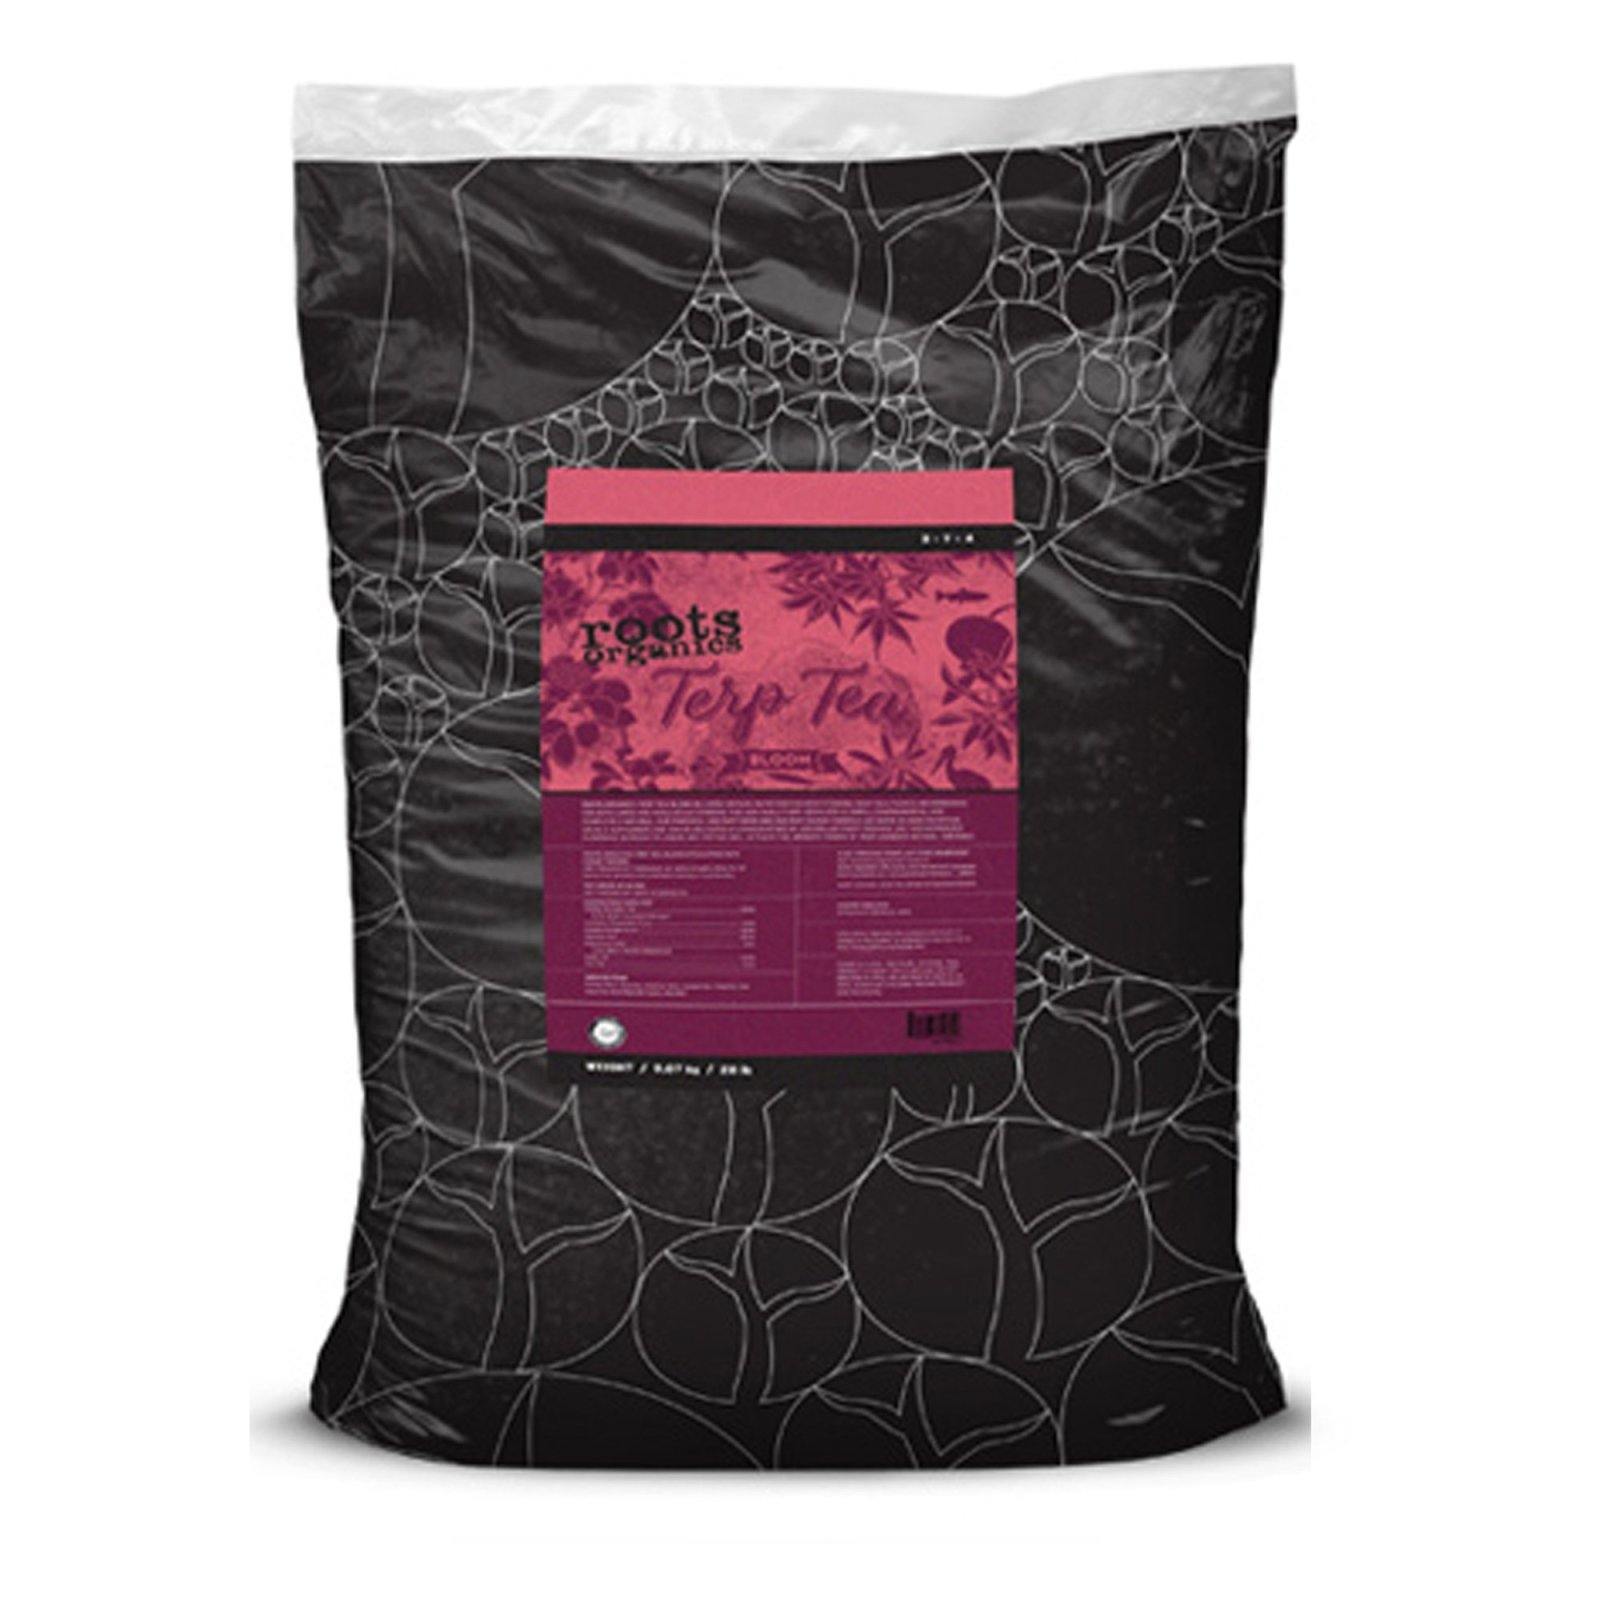 Nutrients, Additives & Solutions - Roots Organics Terp Tea Bloom - 799493711882- Gardin Warehouse